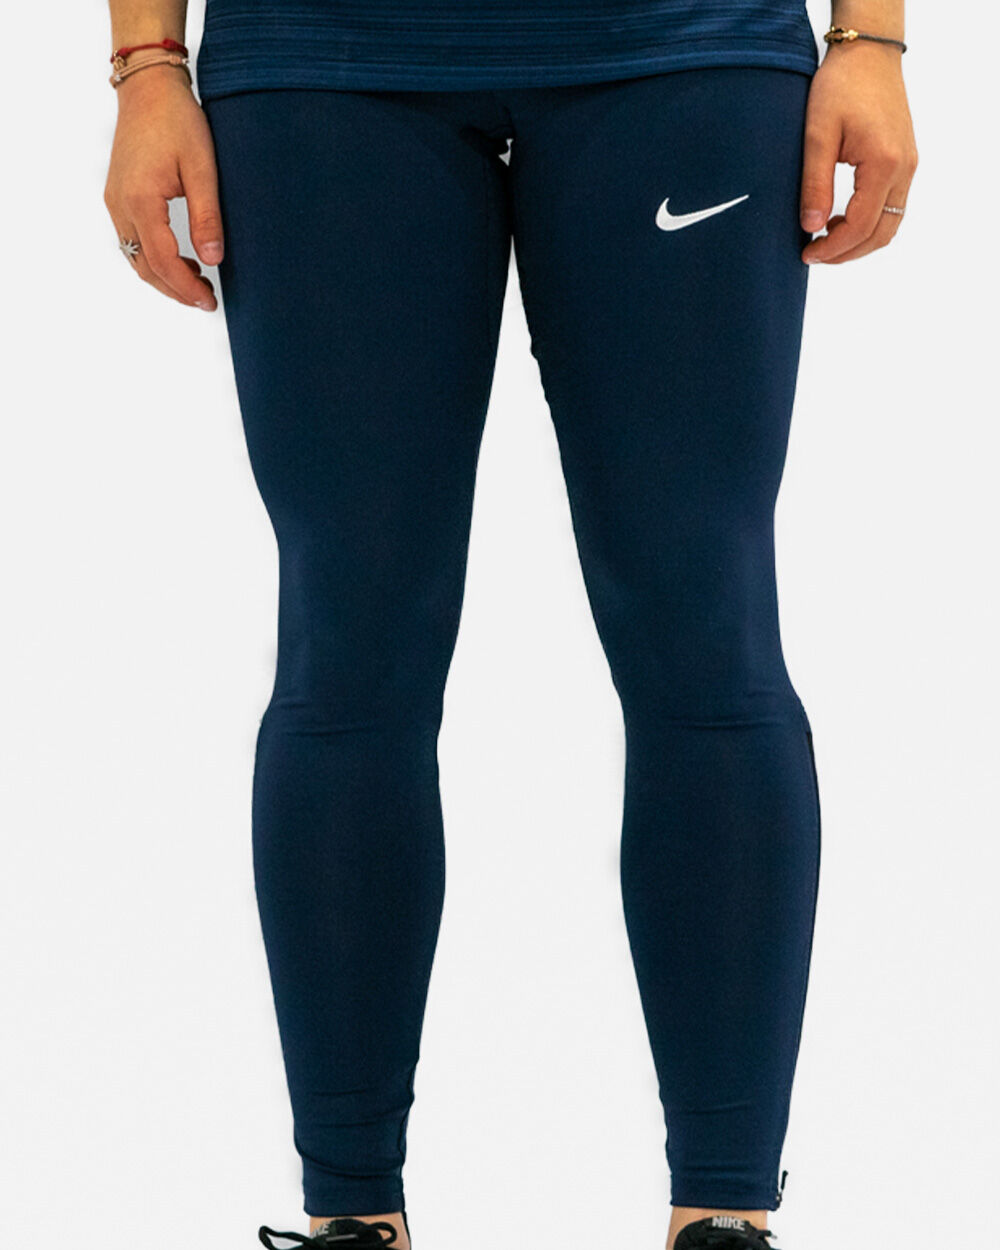 Mallas largas Nike Stock Azul Marino para Mujeres - NT0314-451